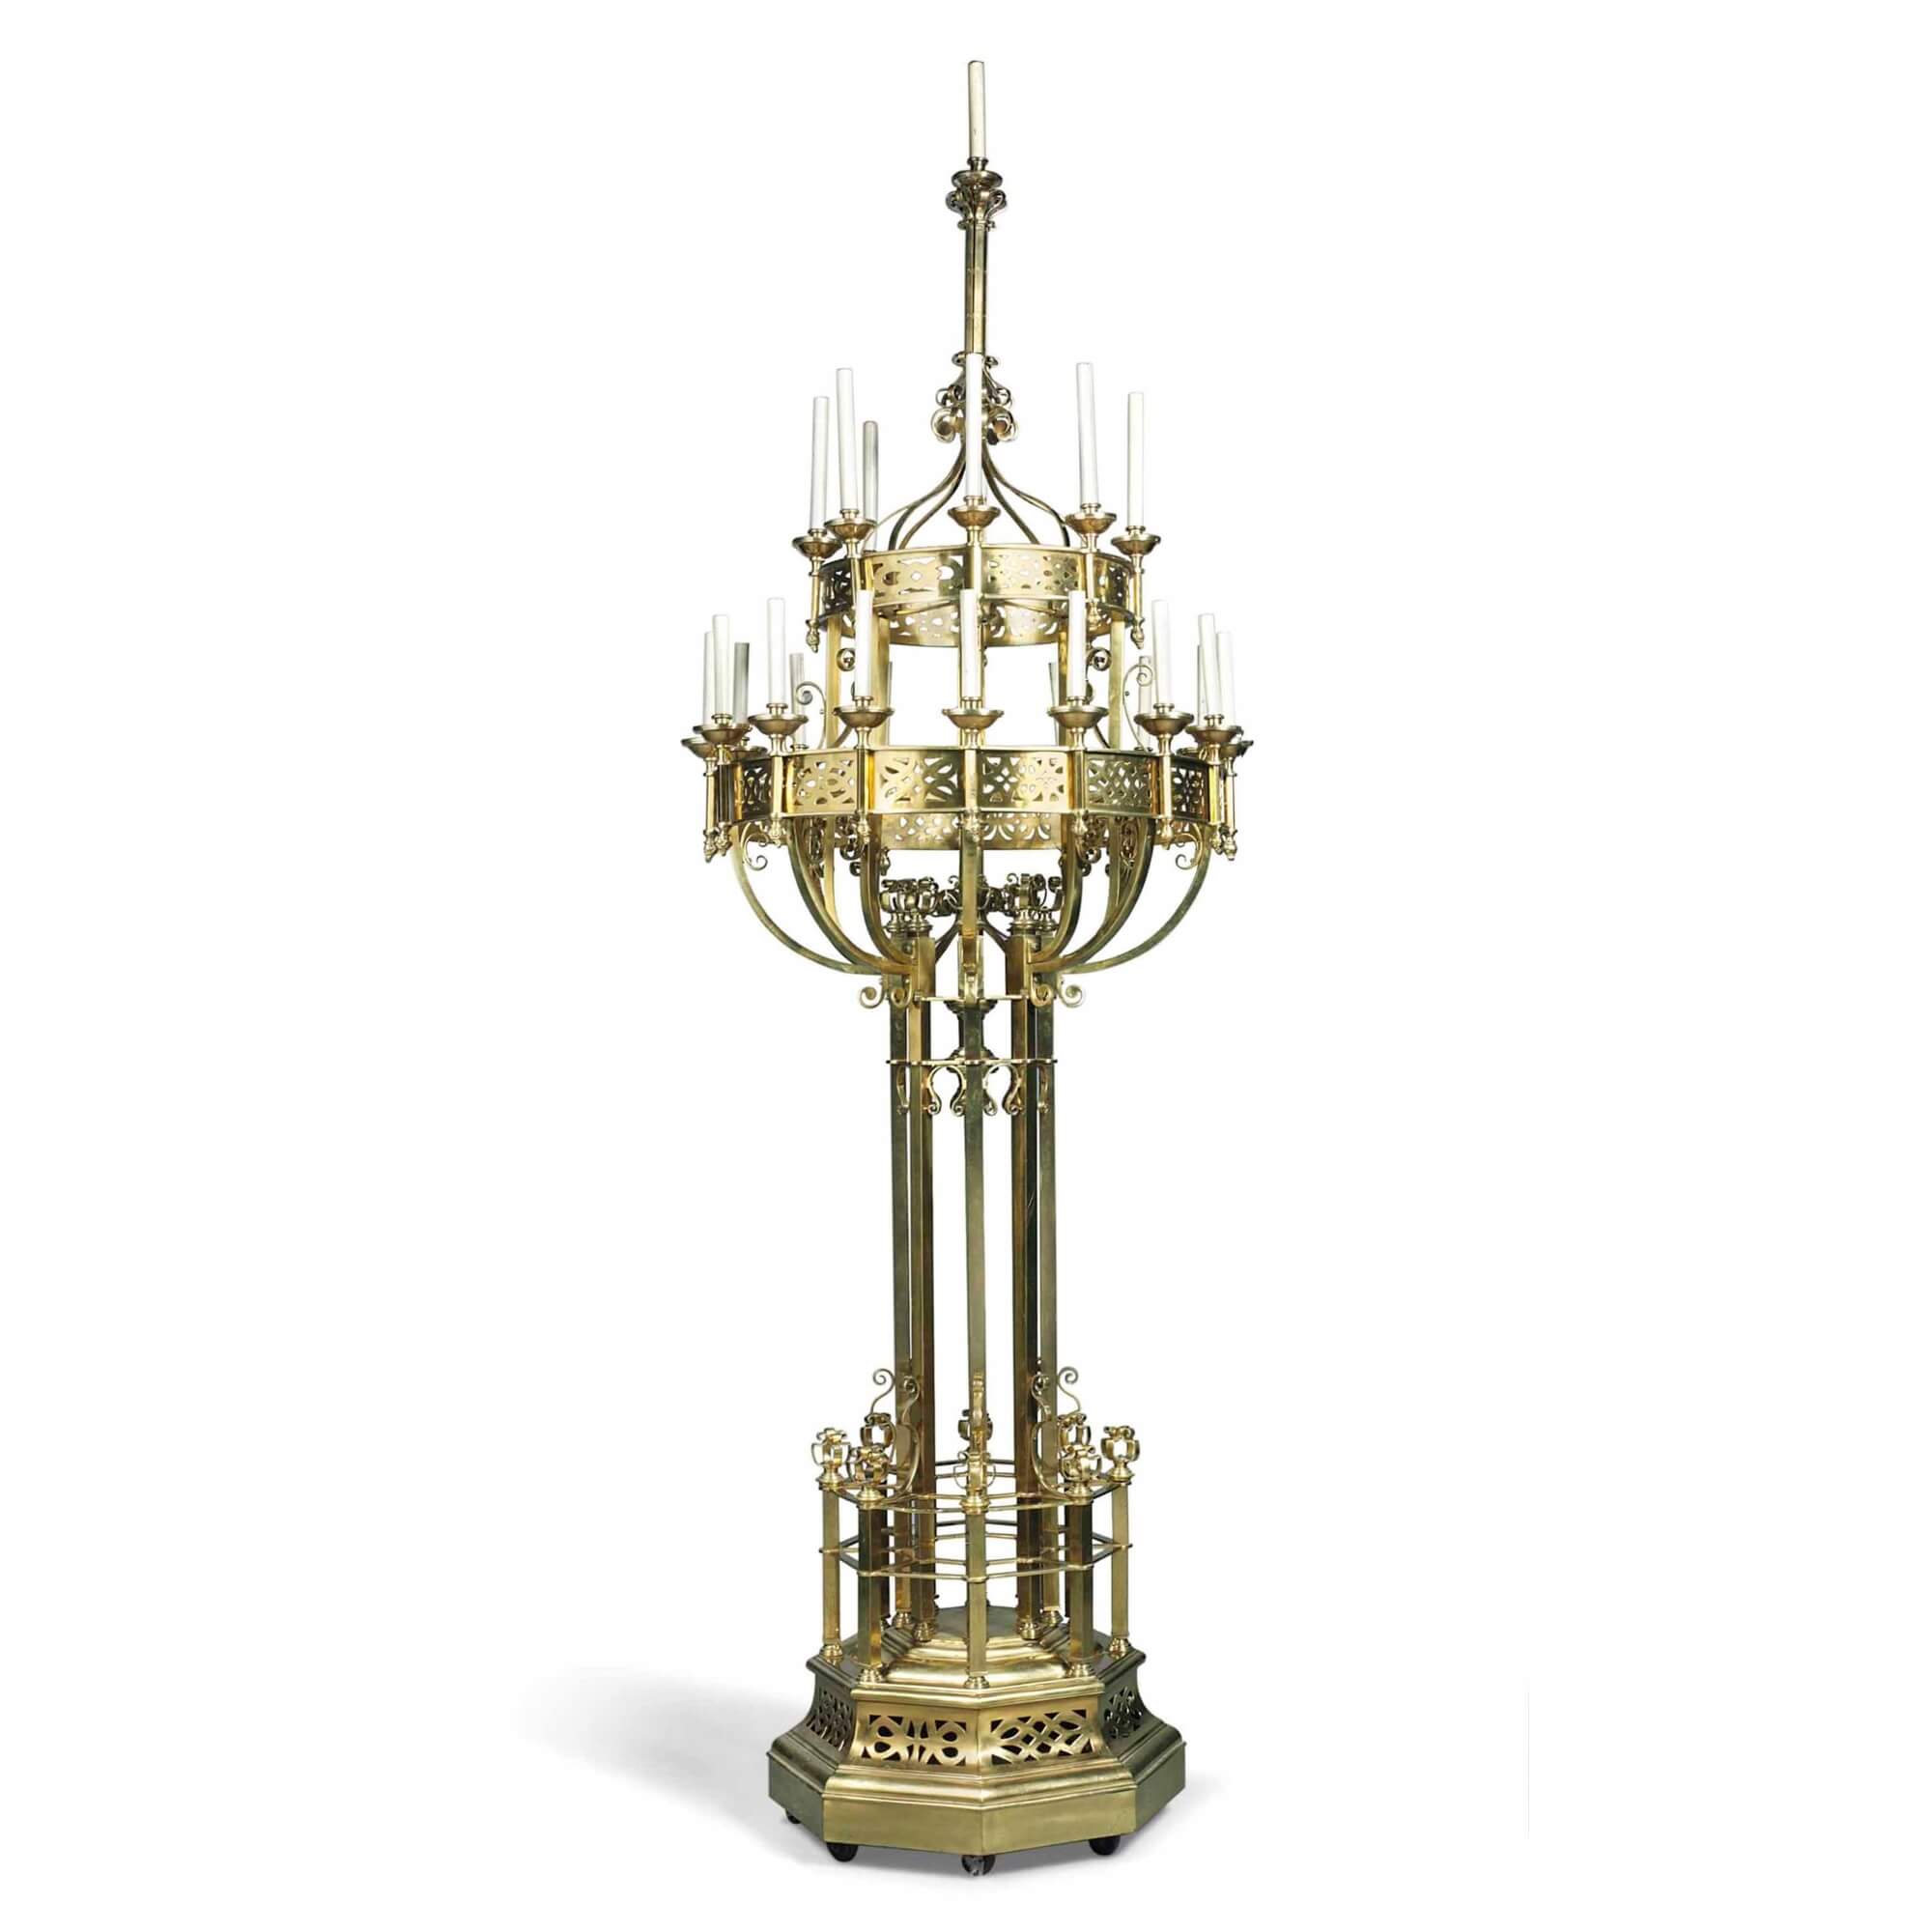 Pair of monumental Neo-Gothic style brass candelabra